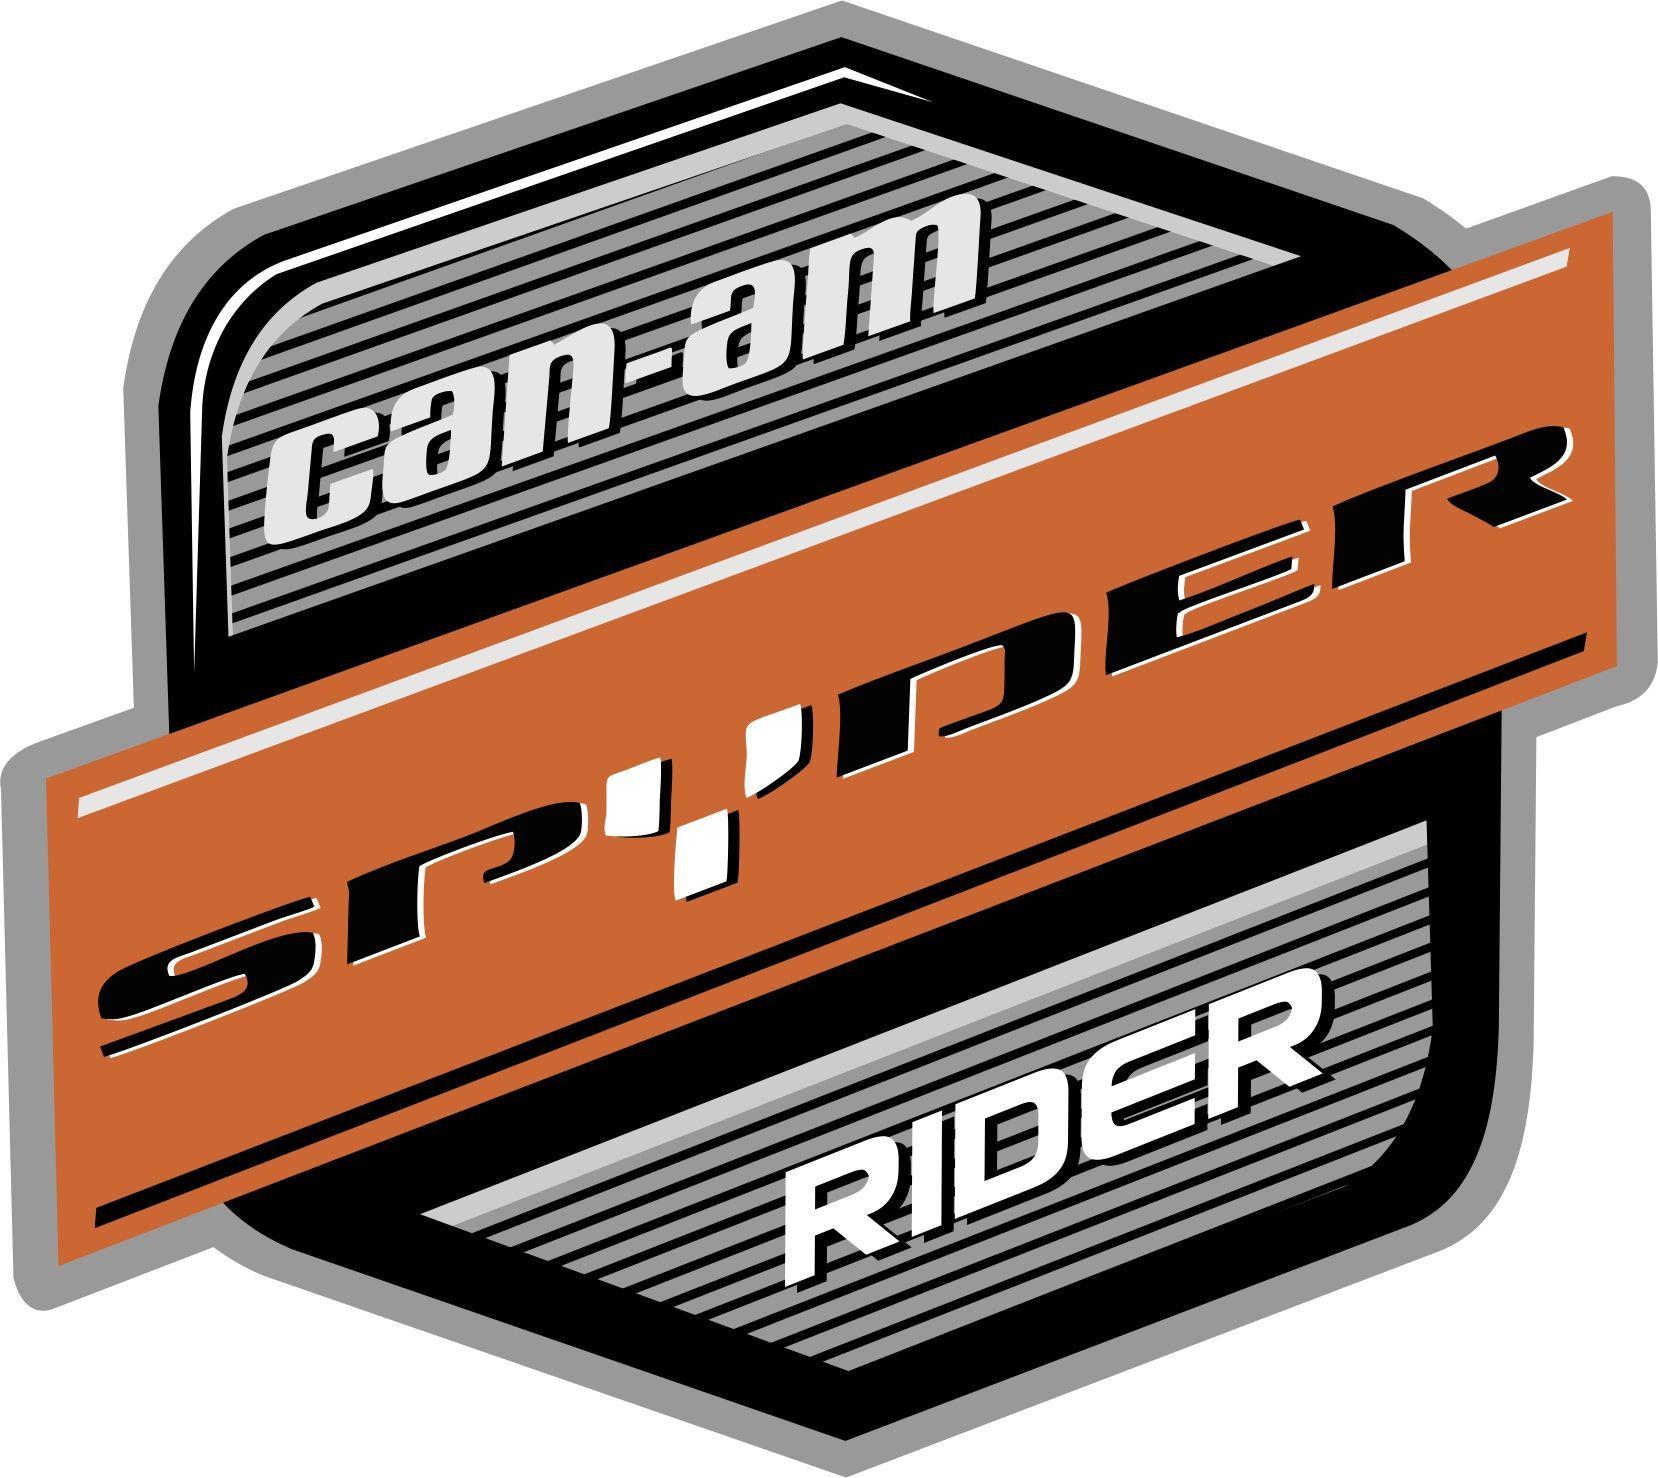 BRP Logo - Can-am Spyder Rider logo emblem #fanart #logo #graphicdesign #canam ...